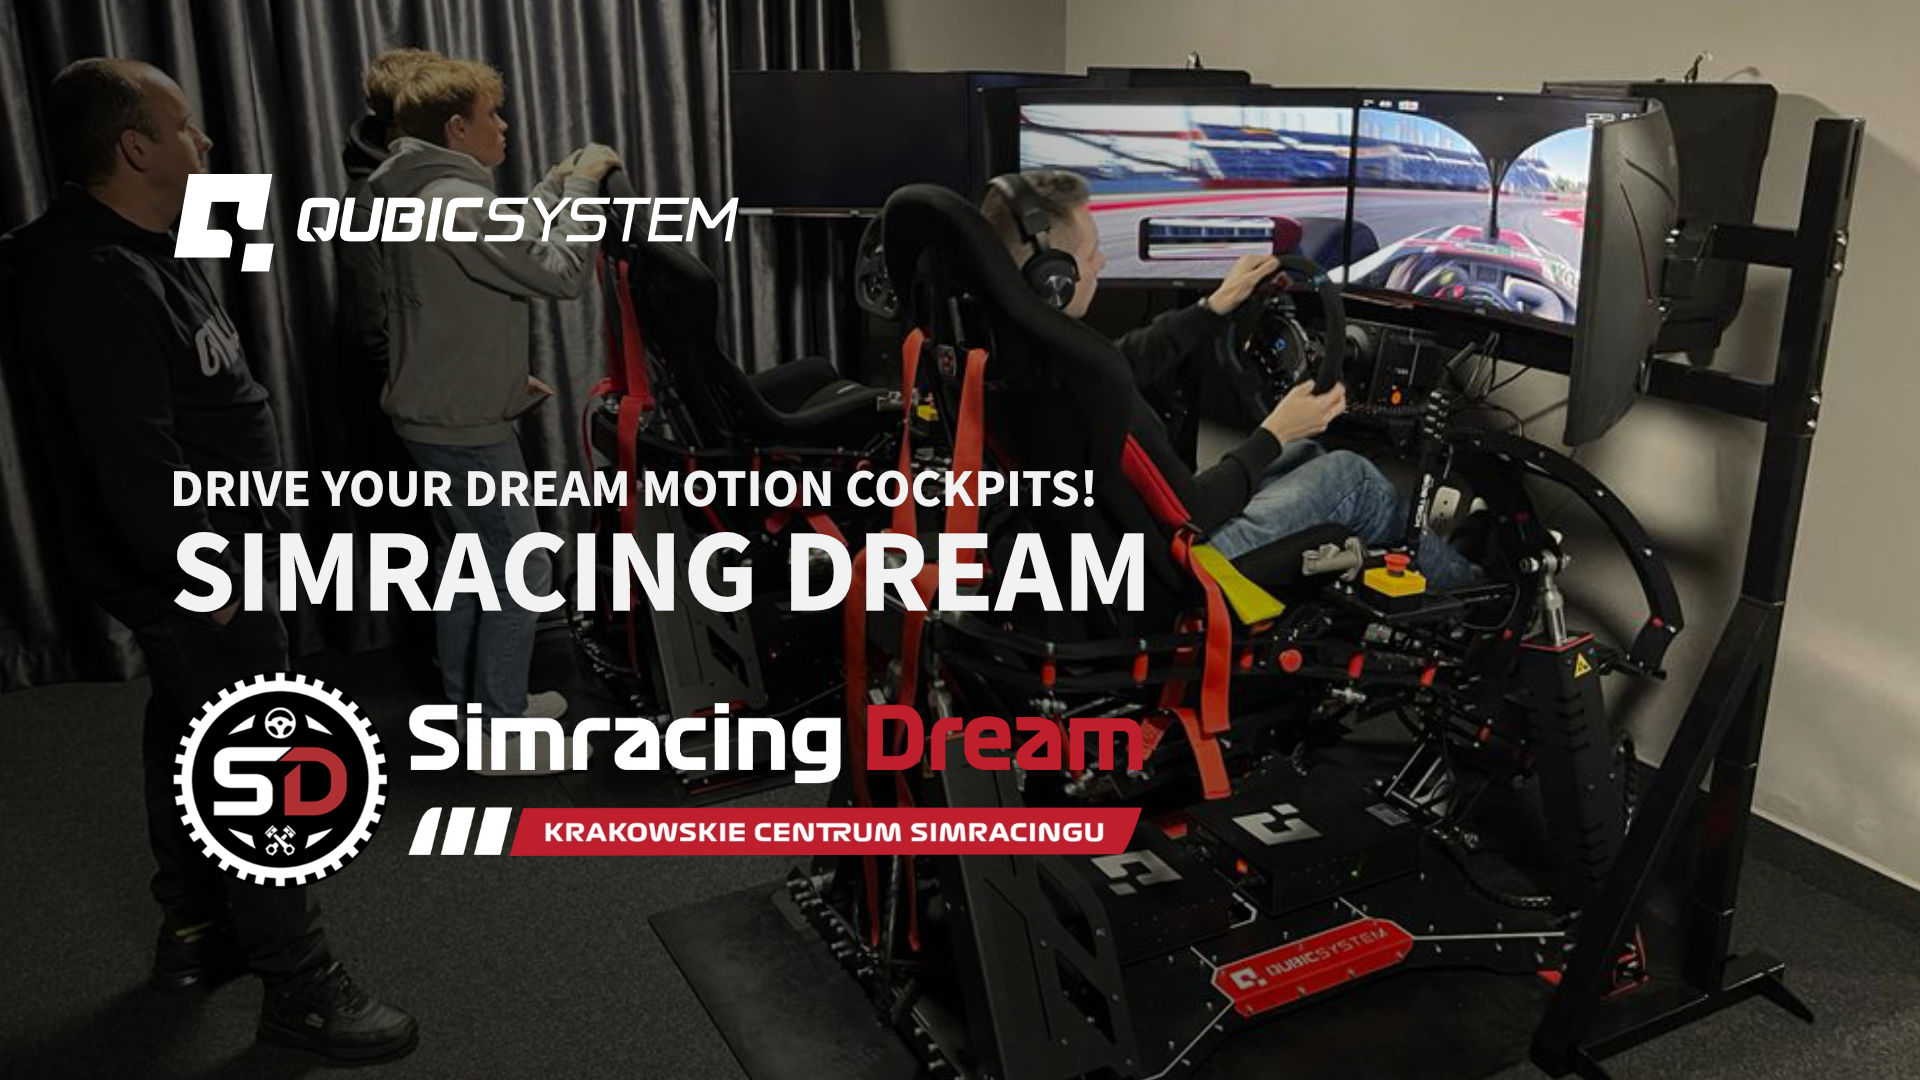 Simracing Dream Cracow - Qubic System Simulator